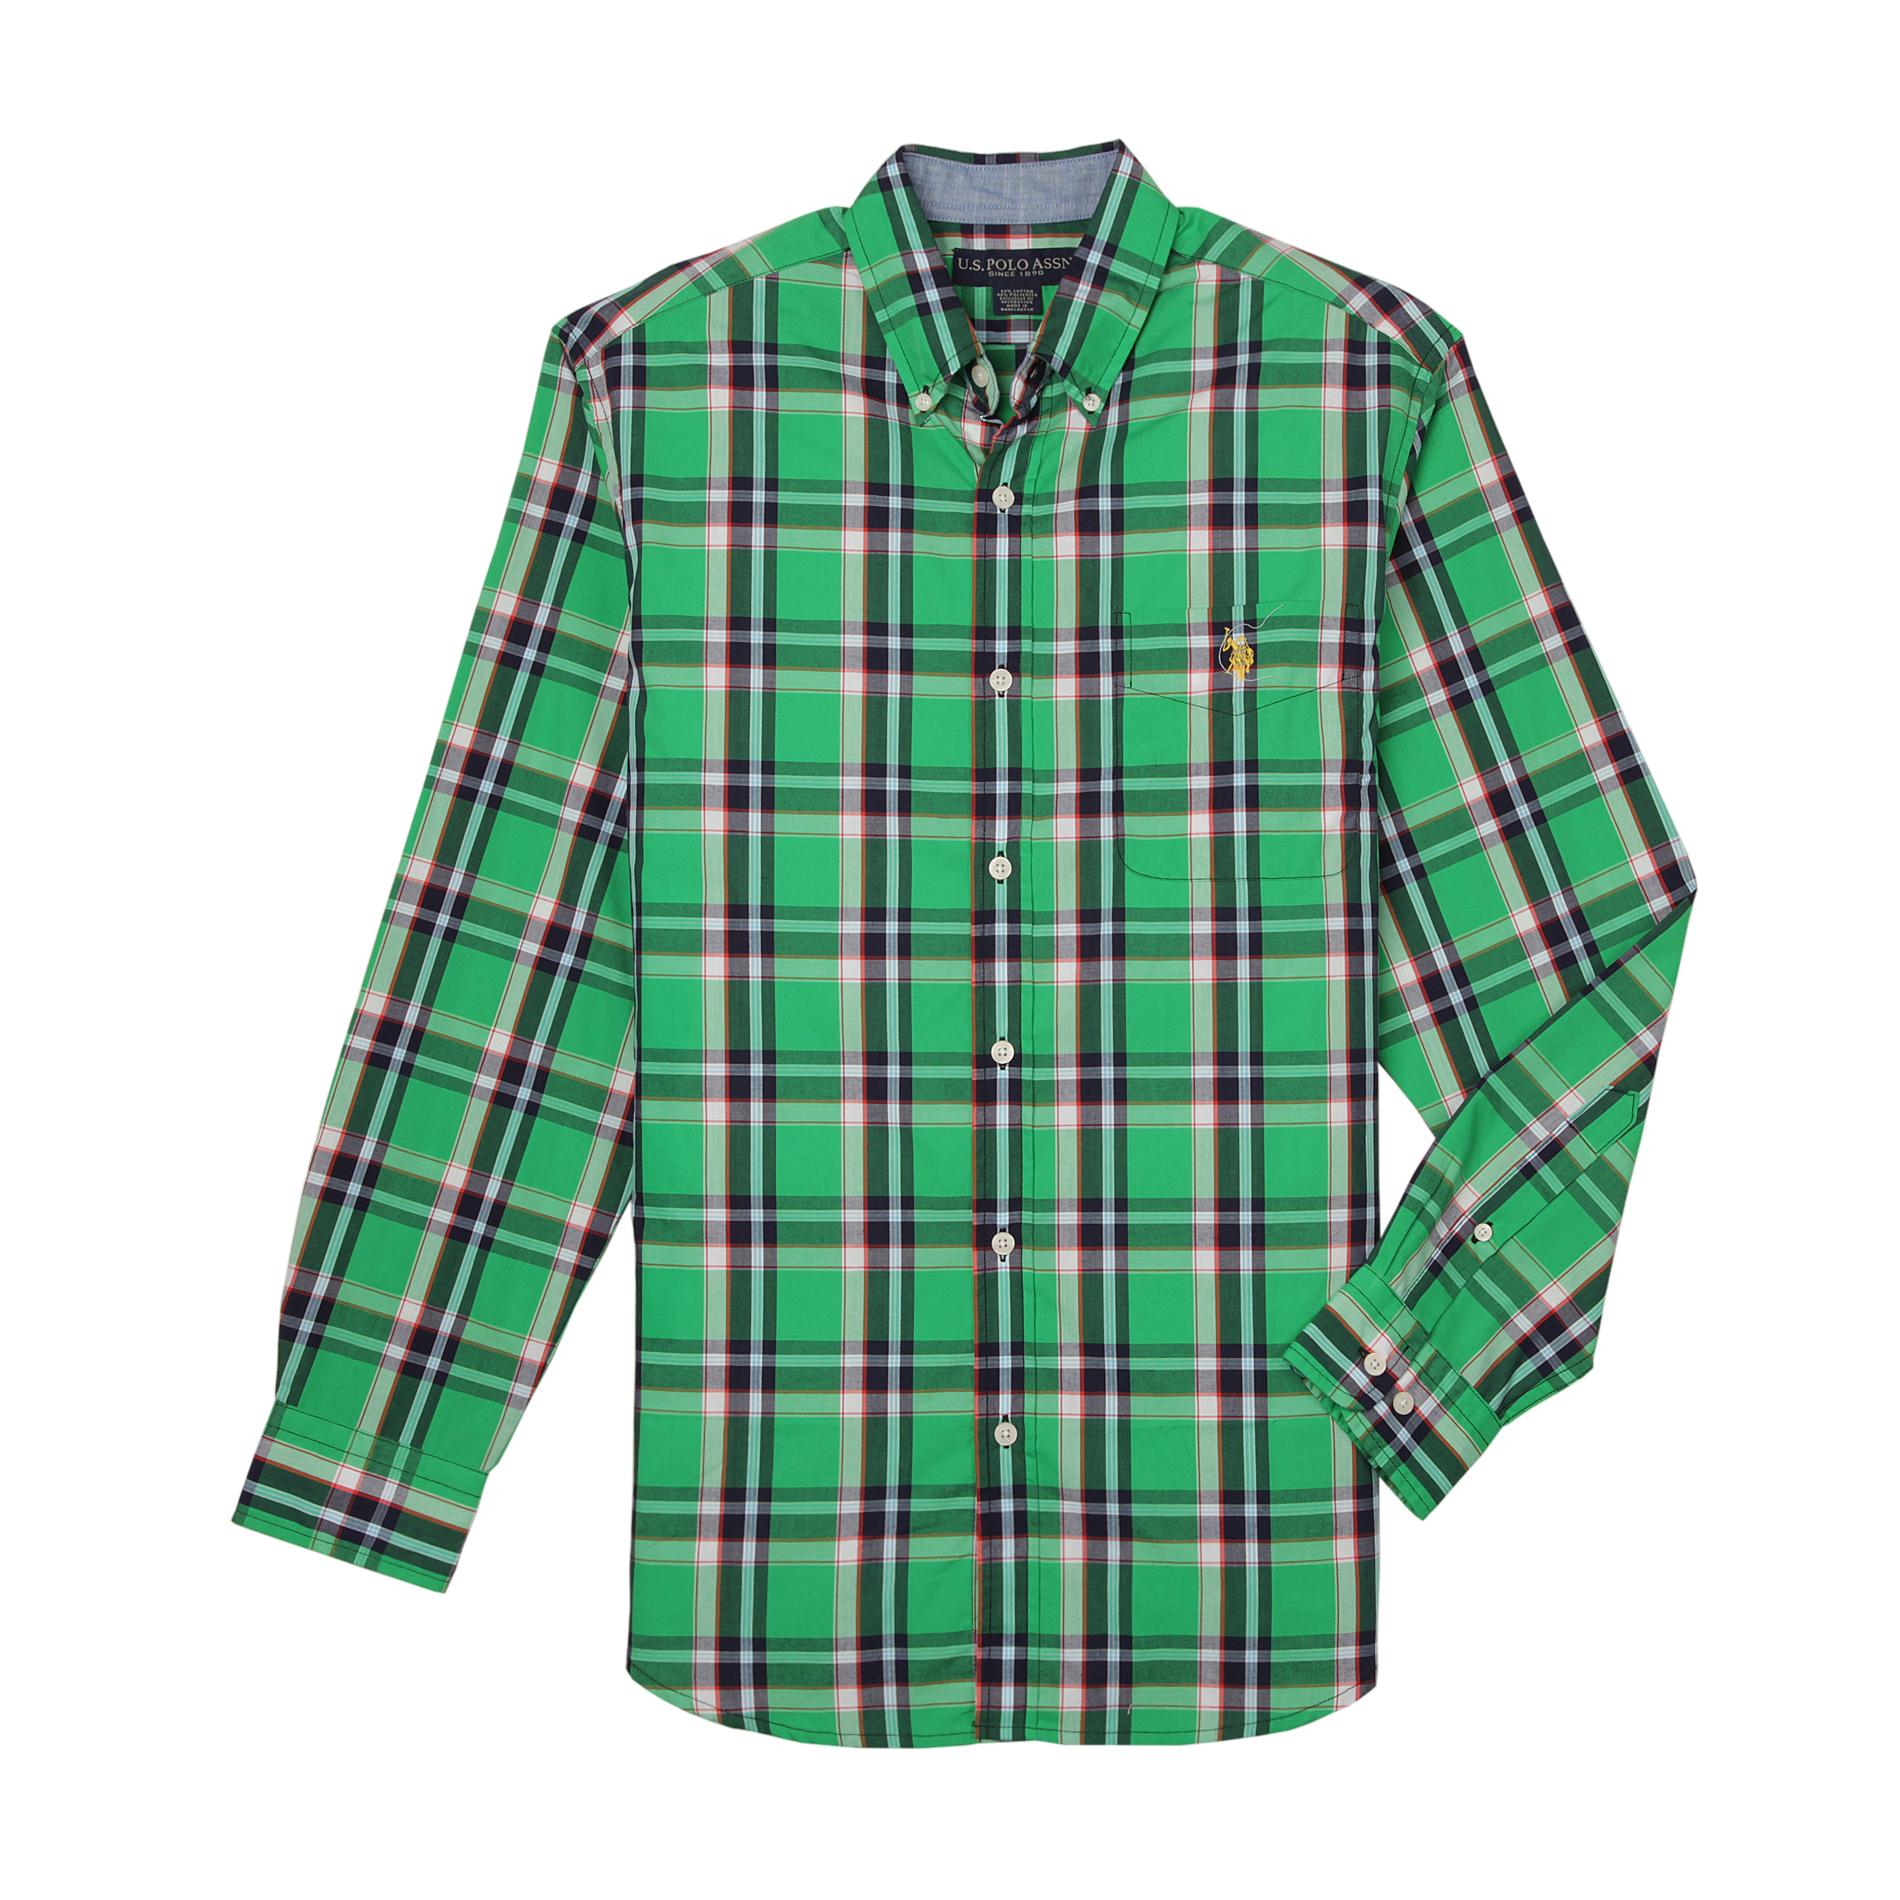 U.S. Polo Assn. Men's Long-Sleeve Casual Shirt - Plaid